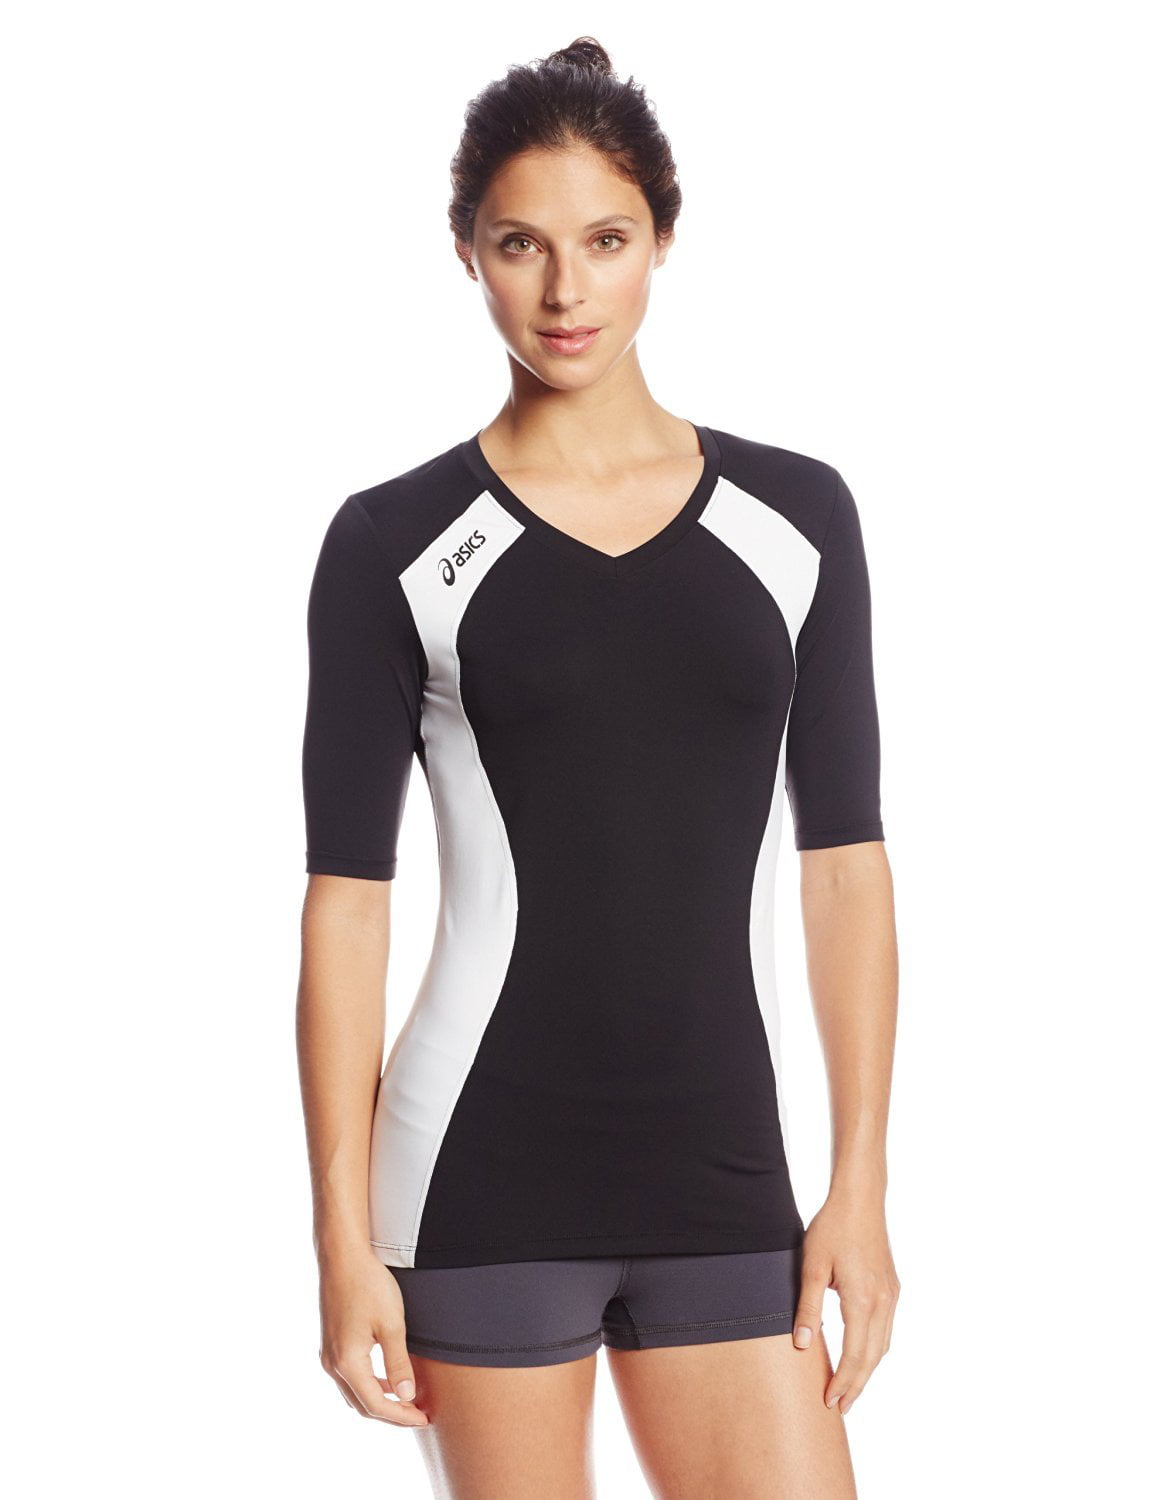 Asics Women's Aggressor Volleyball Jersey, Size: Medium, Black